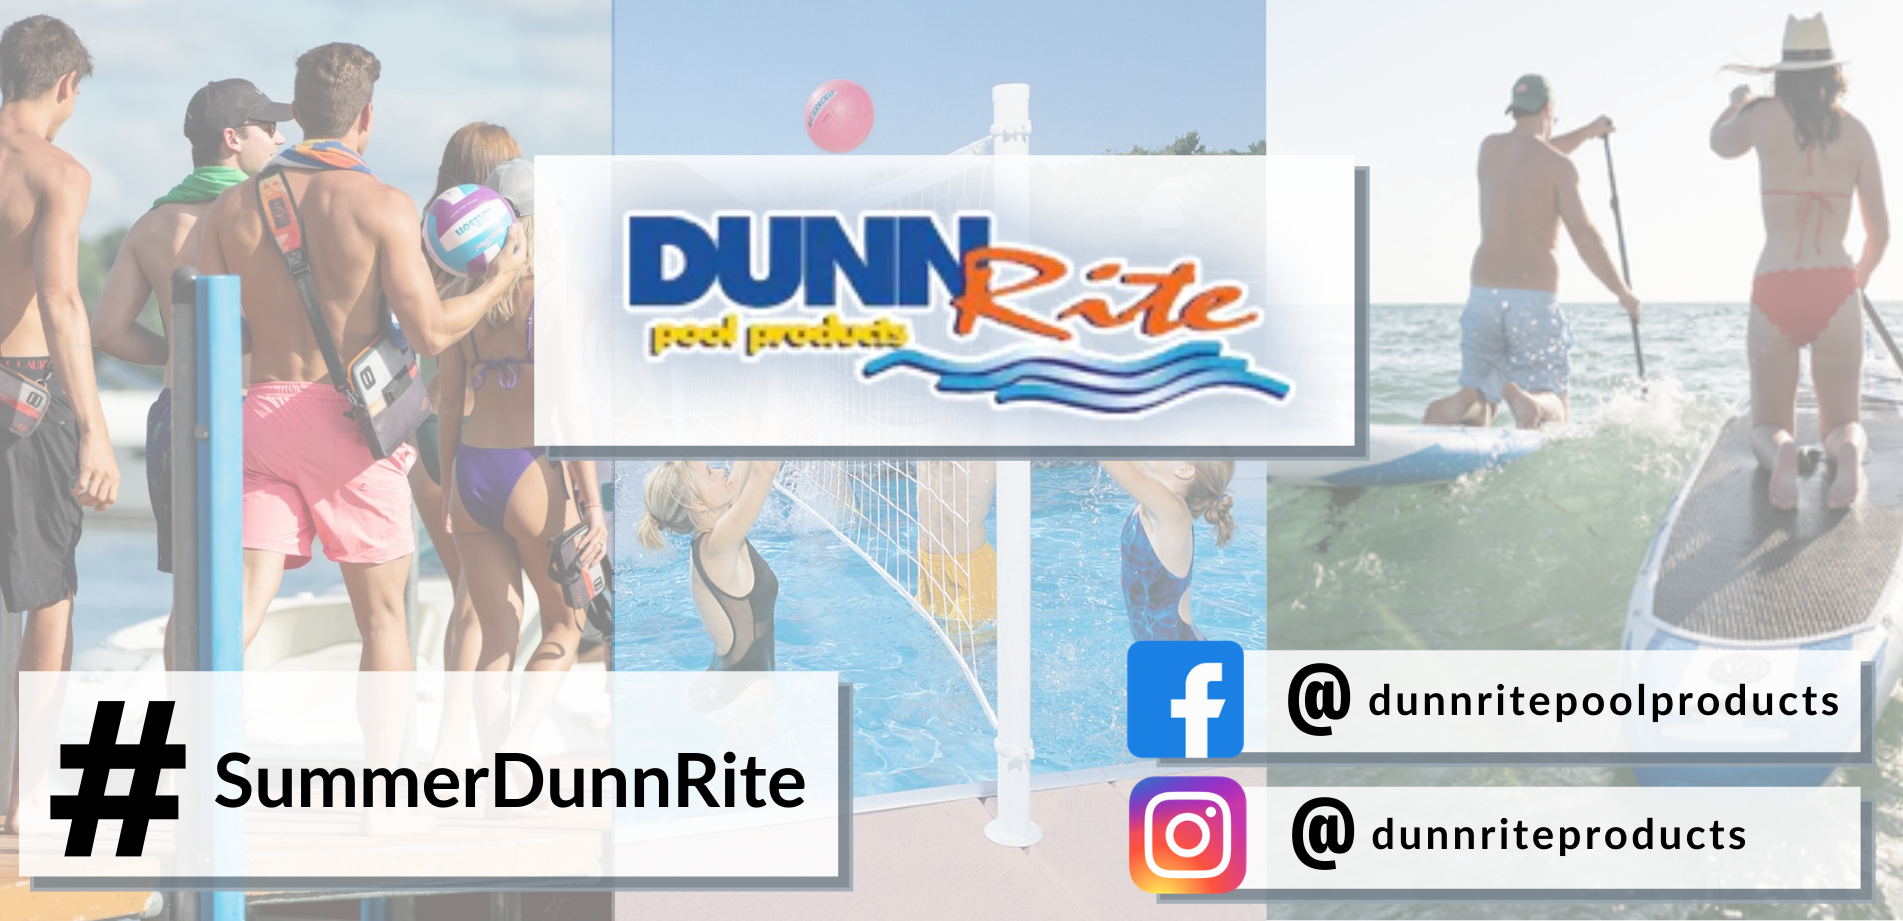 #SummerDunnRite-Dunn Rite Sales and Coupons